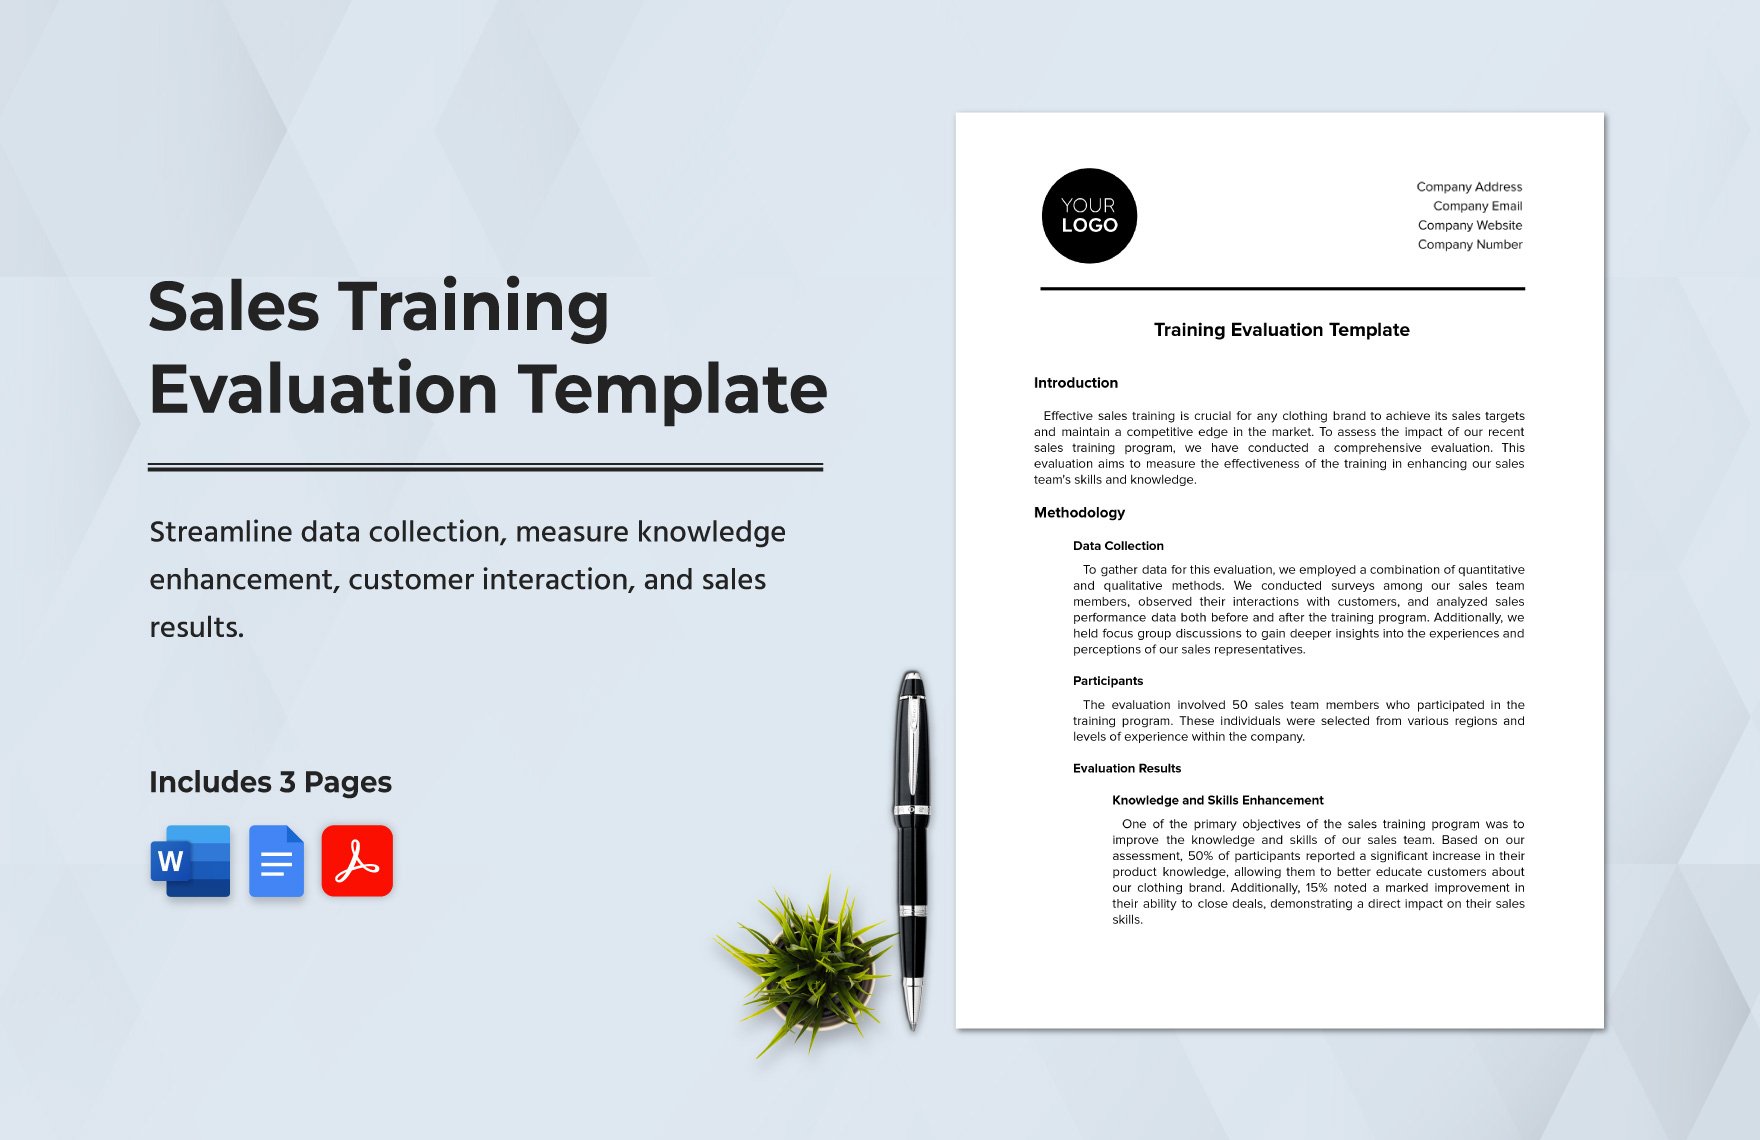  Sales Training Evaluation Template